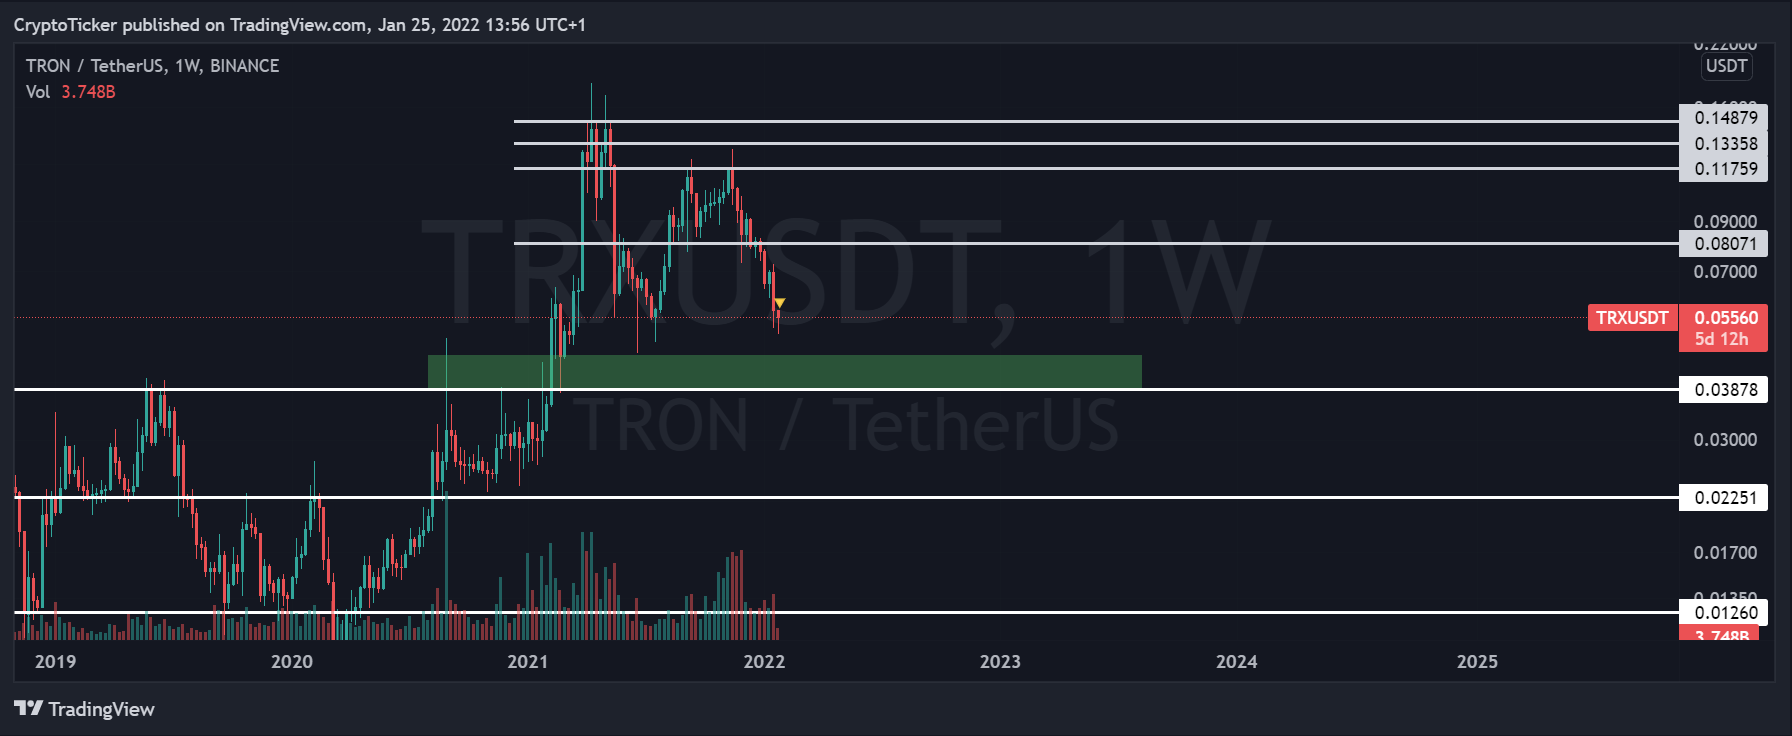 Tron Price Prediction - TRON/USDT 1-week chart